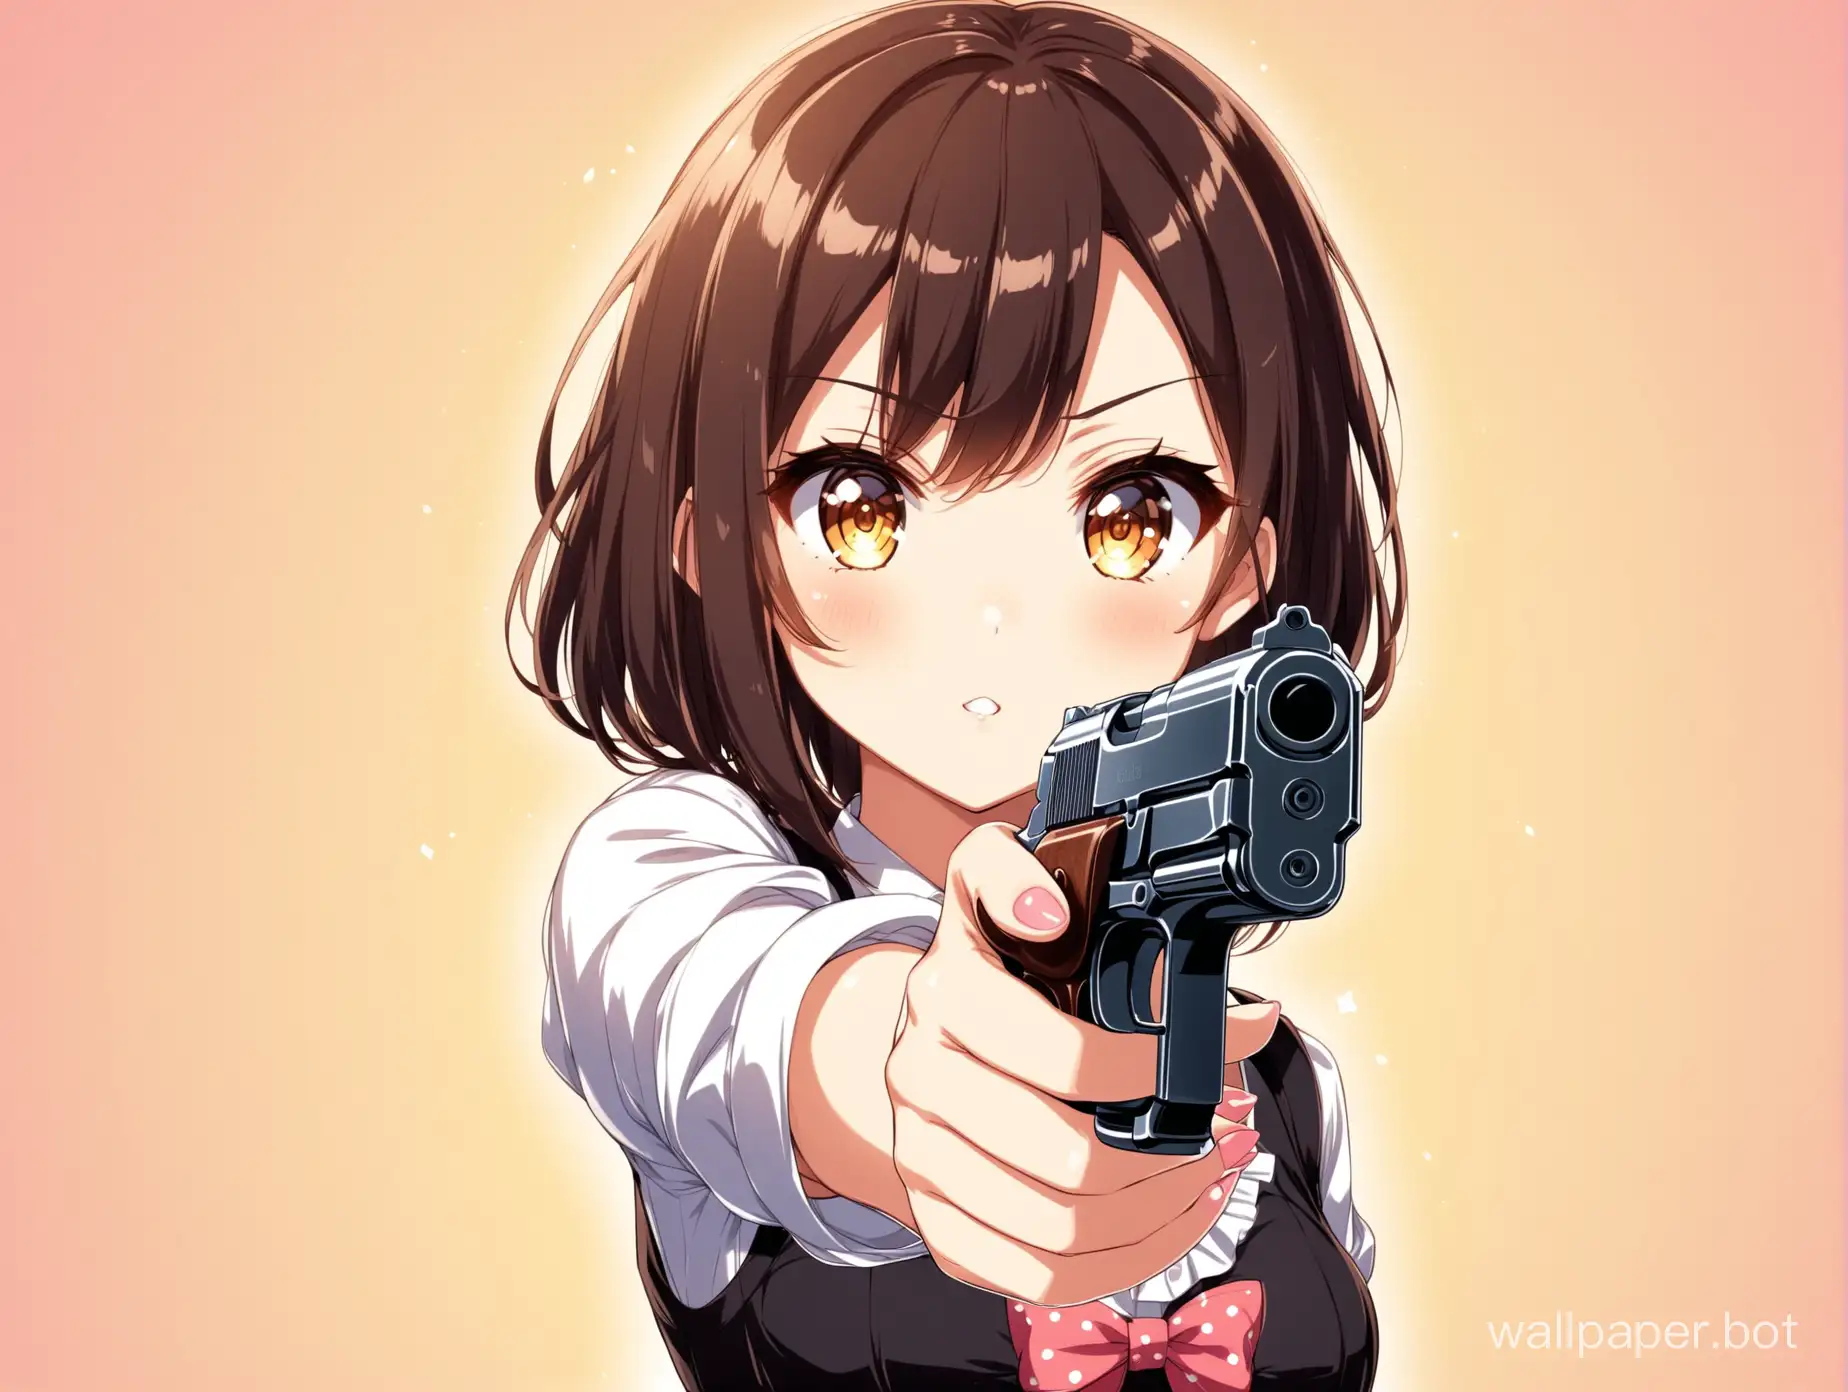 Flirty-Anime-Girl-Aiming-with-Handgun-Cute-Petite-Female-Character-Artwork